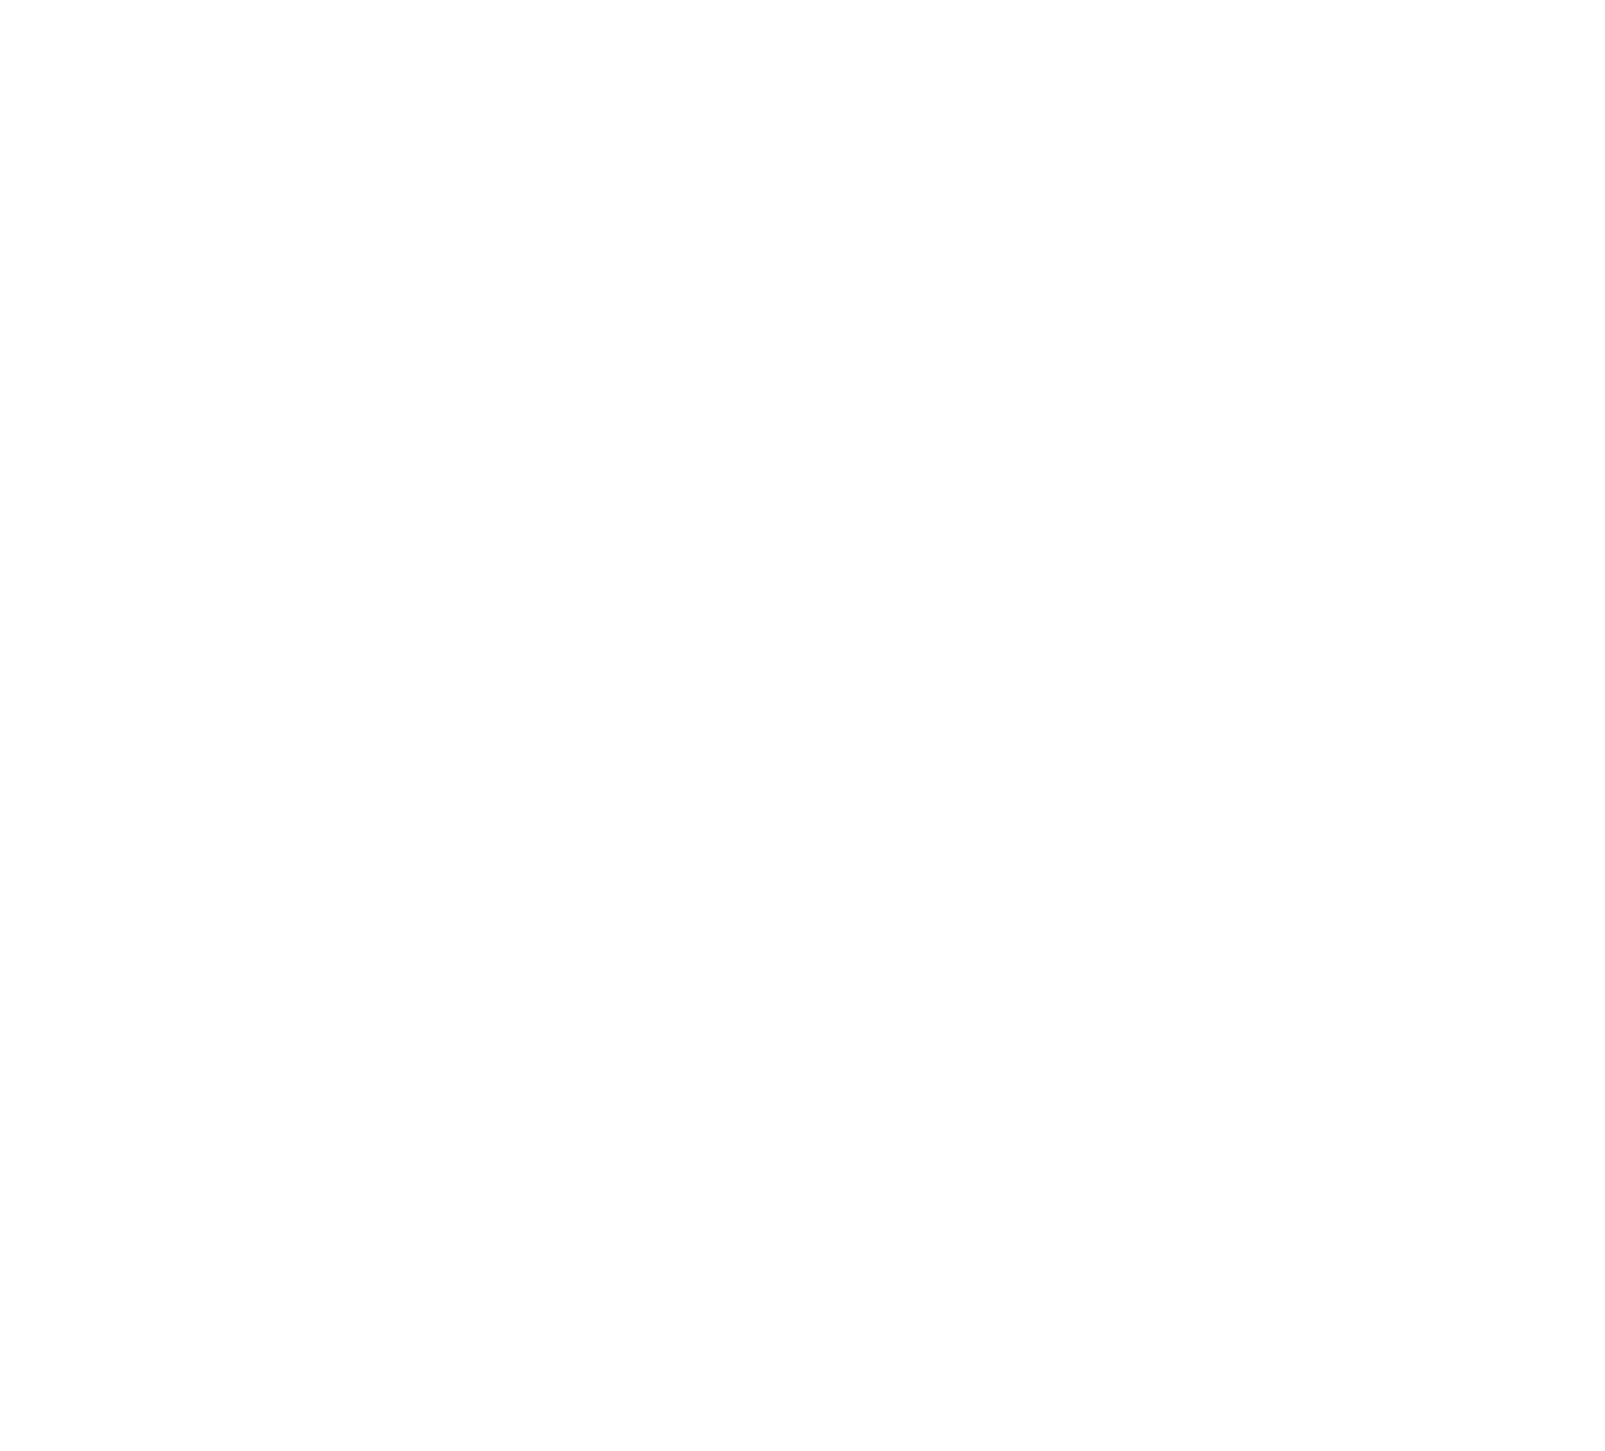 Etihad Etisalat (Mobily) logo pour fonds sombres (PNG transparent)